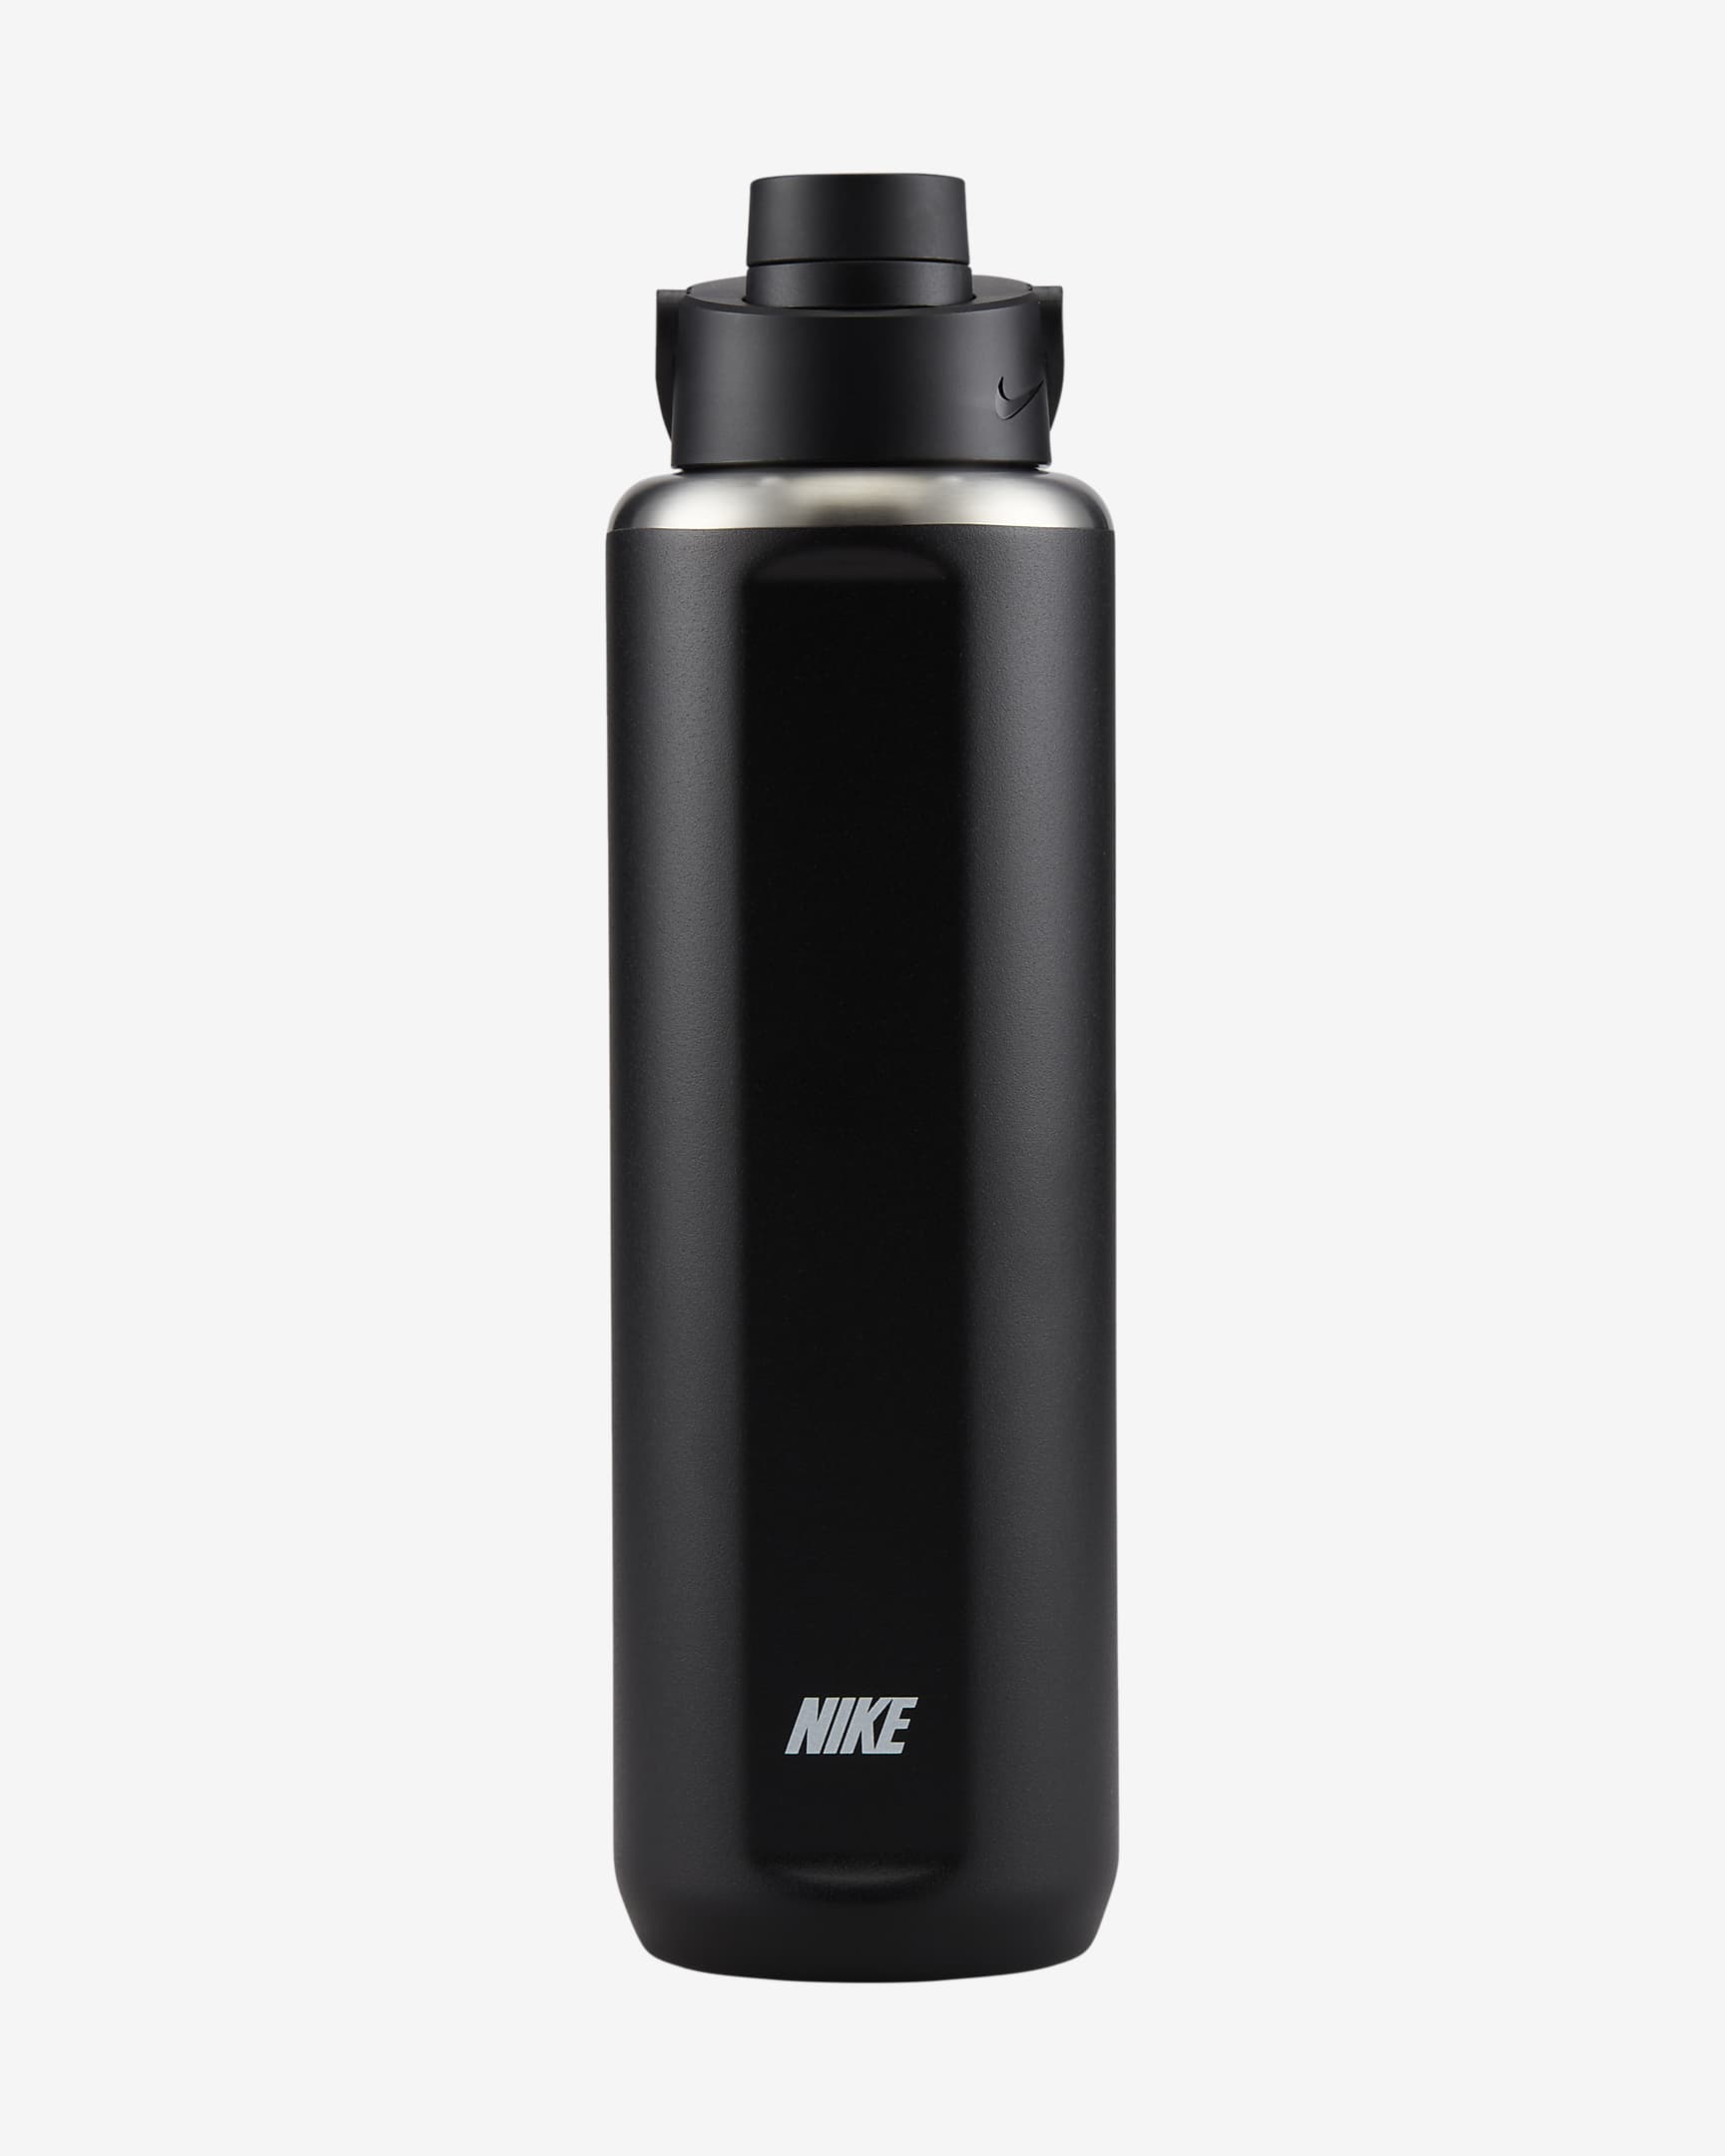 Nike Recharge Stainless Steel Chug Bottle (32 oz) - Black